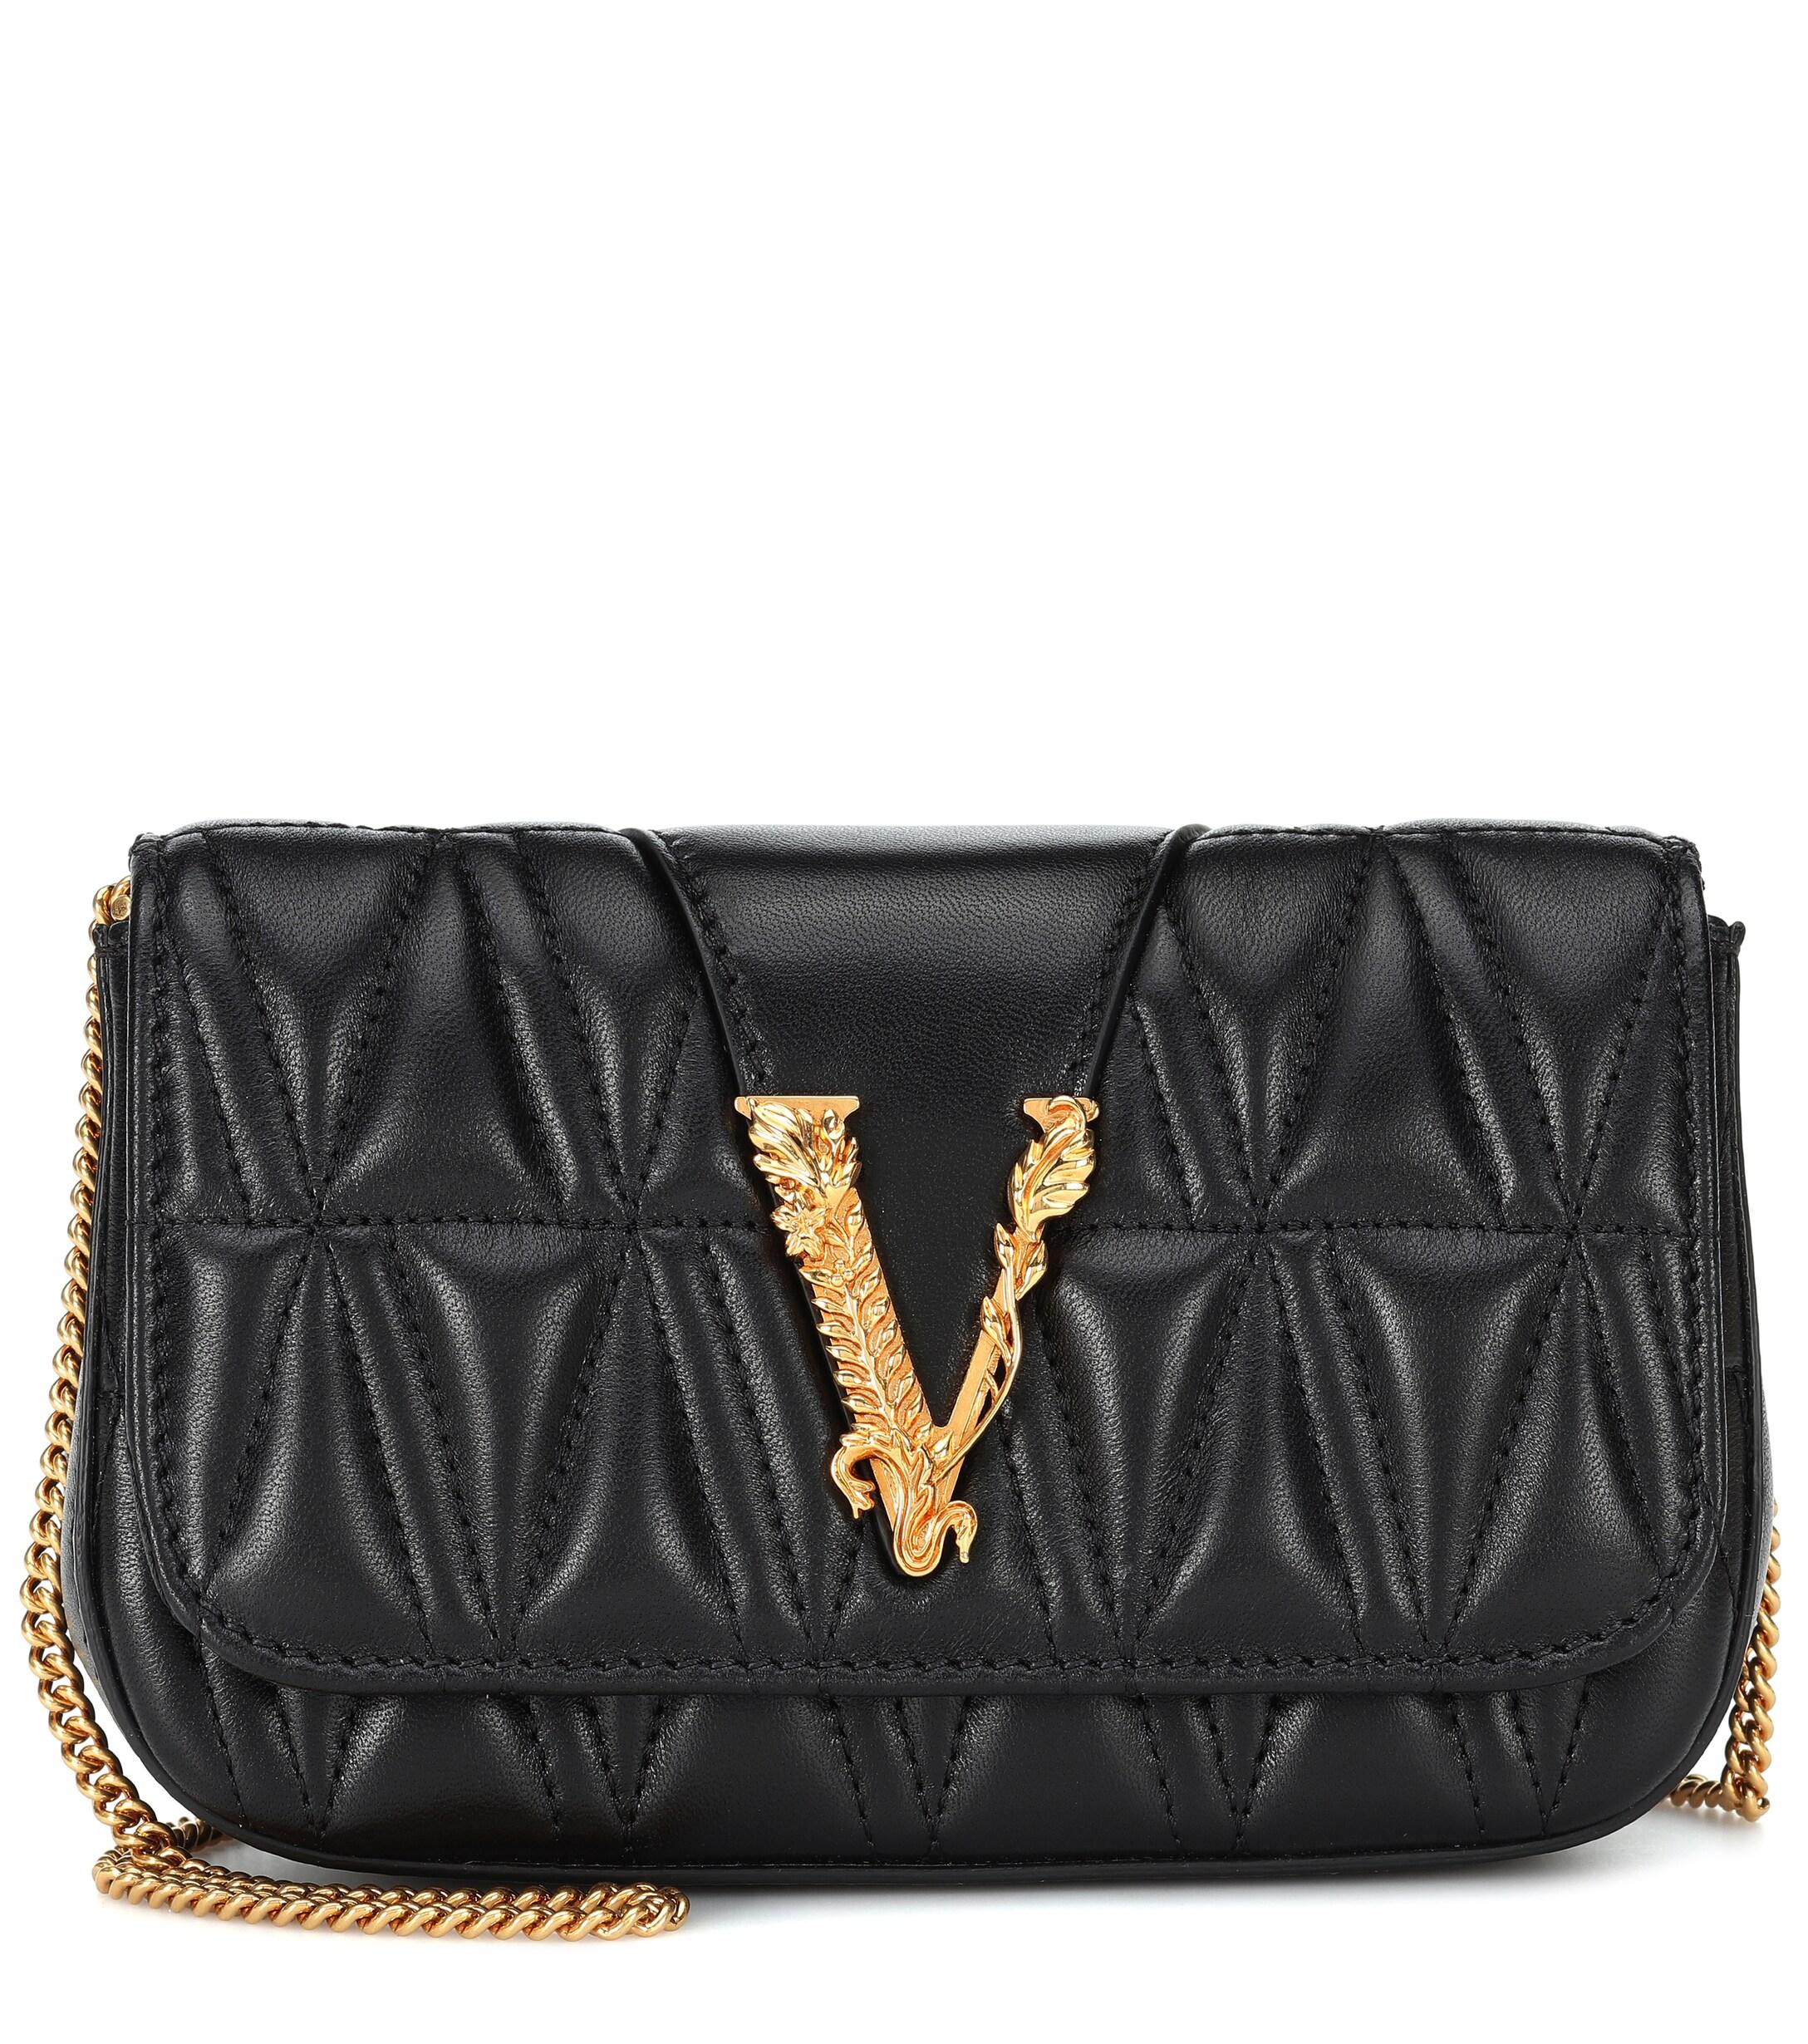 Versace Virtus Quilted-leather Shoulder Bag in Black - Lyst